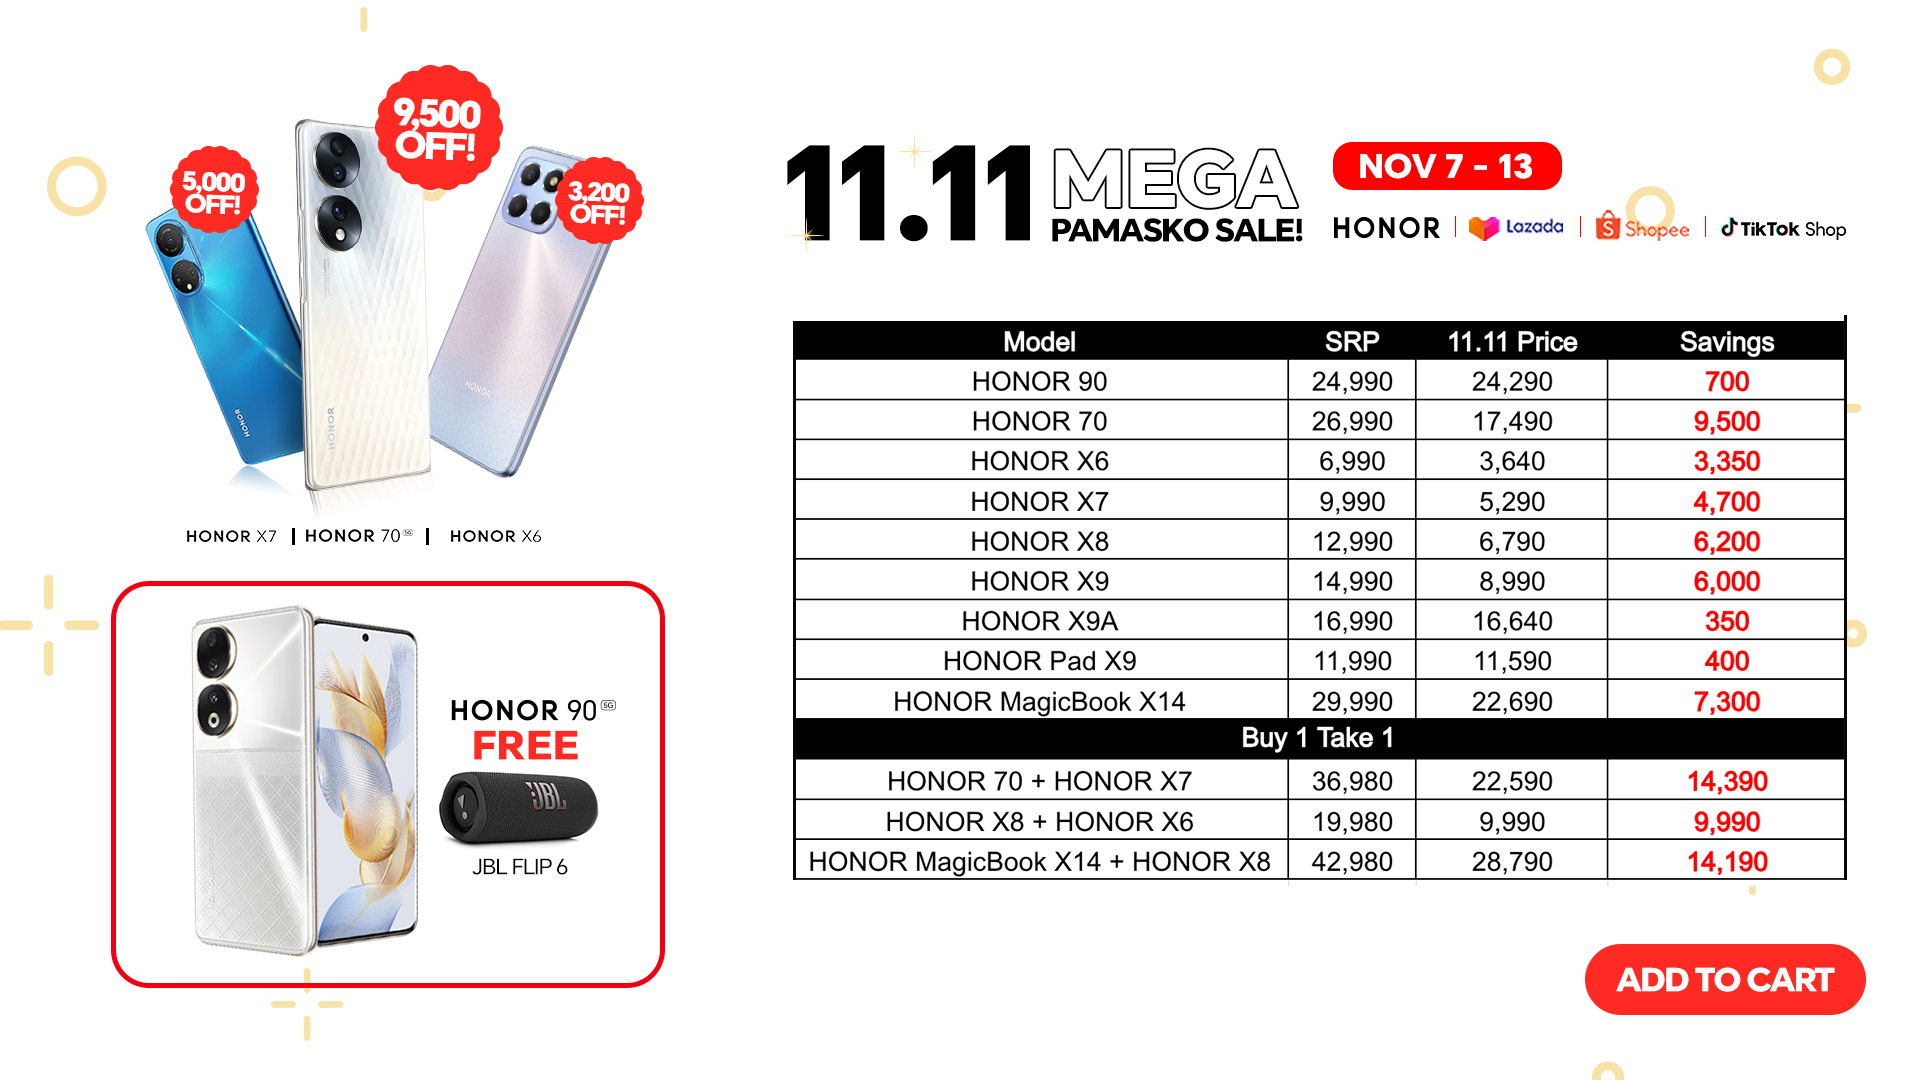 HONOR 11.11 Mega Pamasko Sale: FREE JBL Speakers and Big Price Drops!